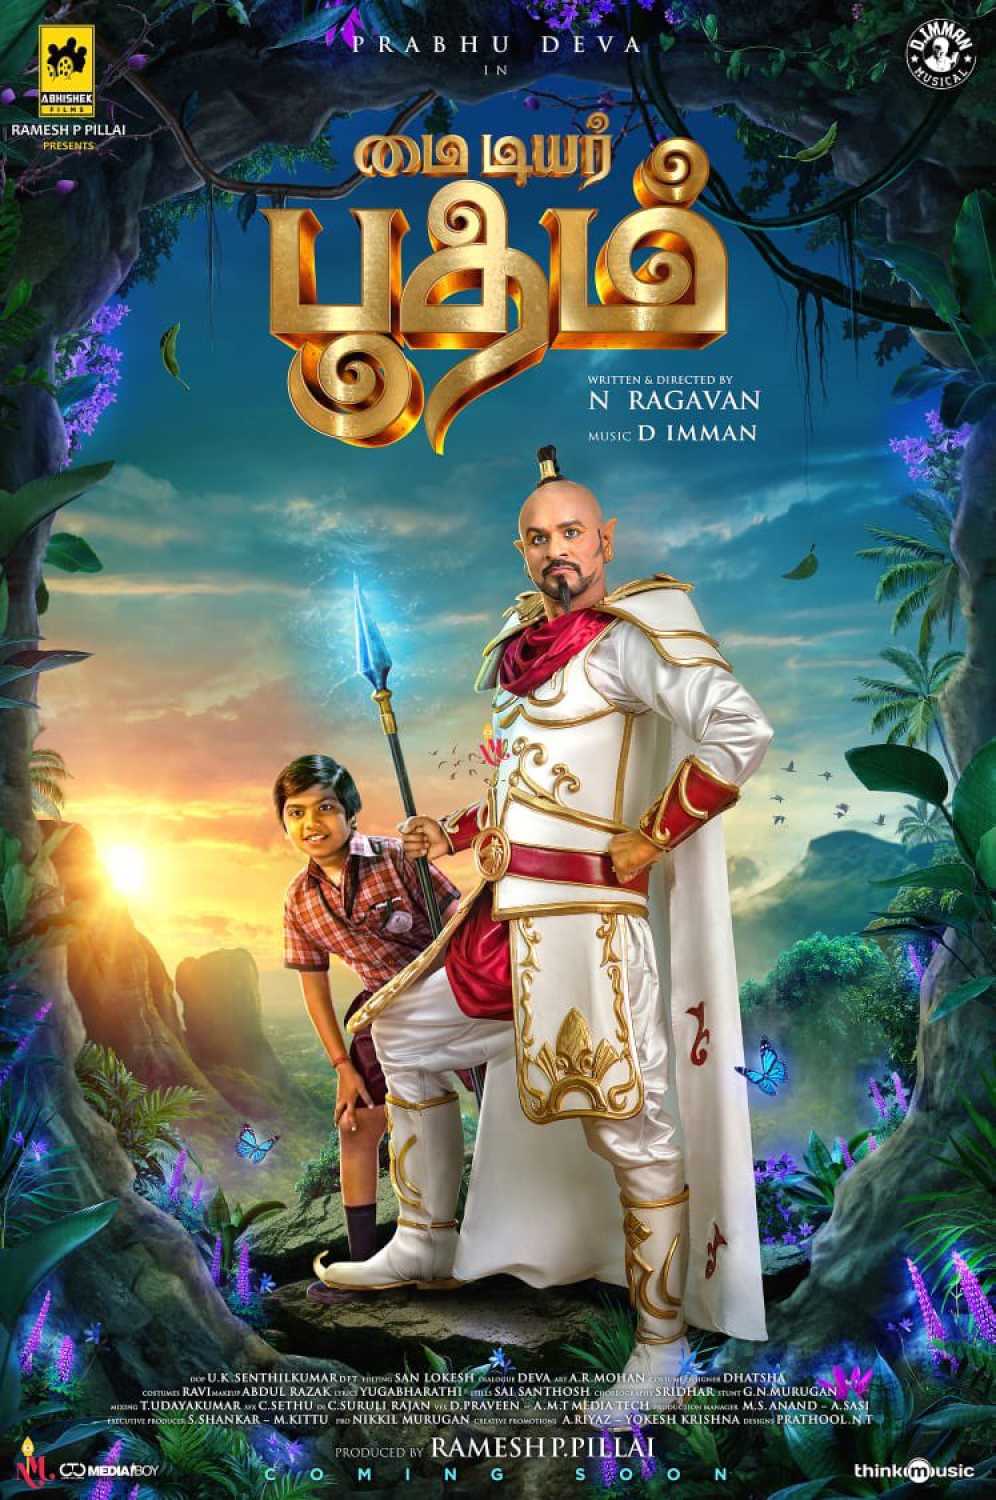 2022 tamil movie download